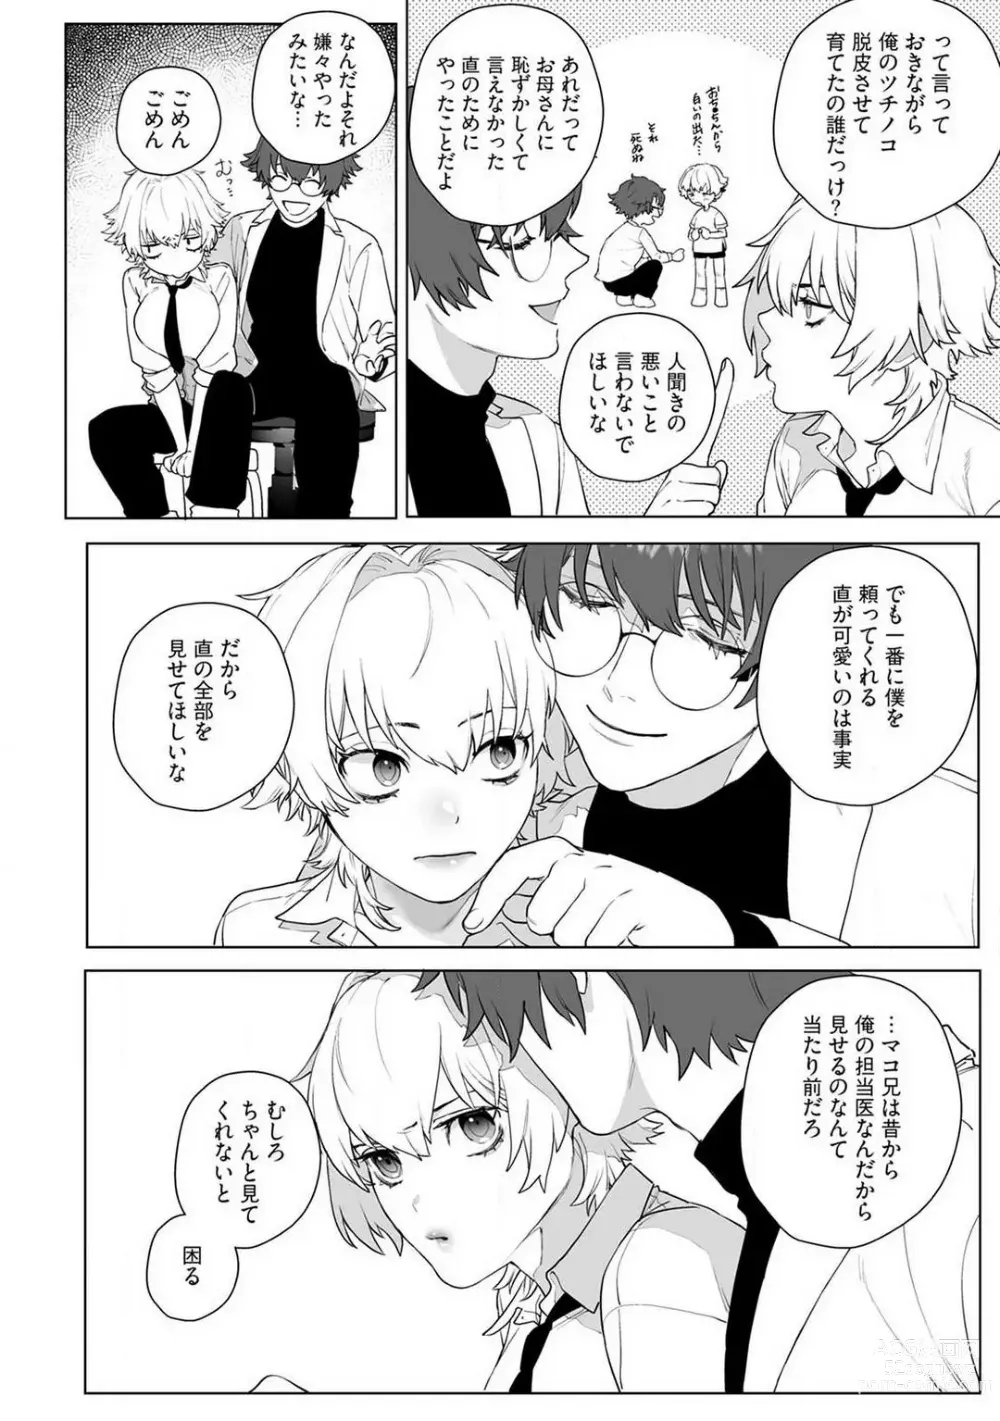 Page 16 of manga Onnanoko no Karada 1-3